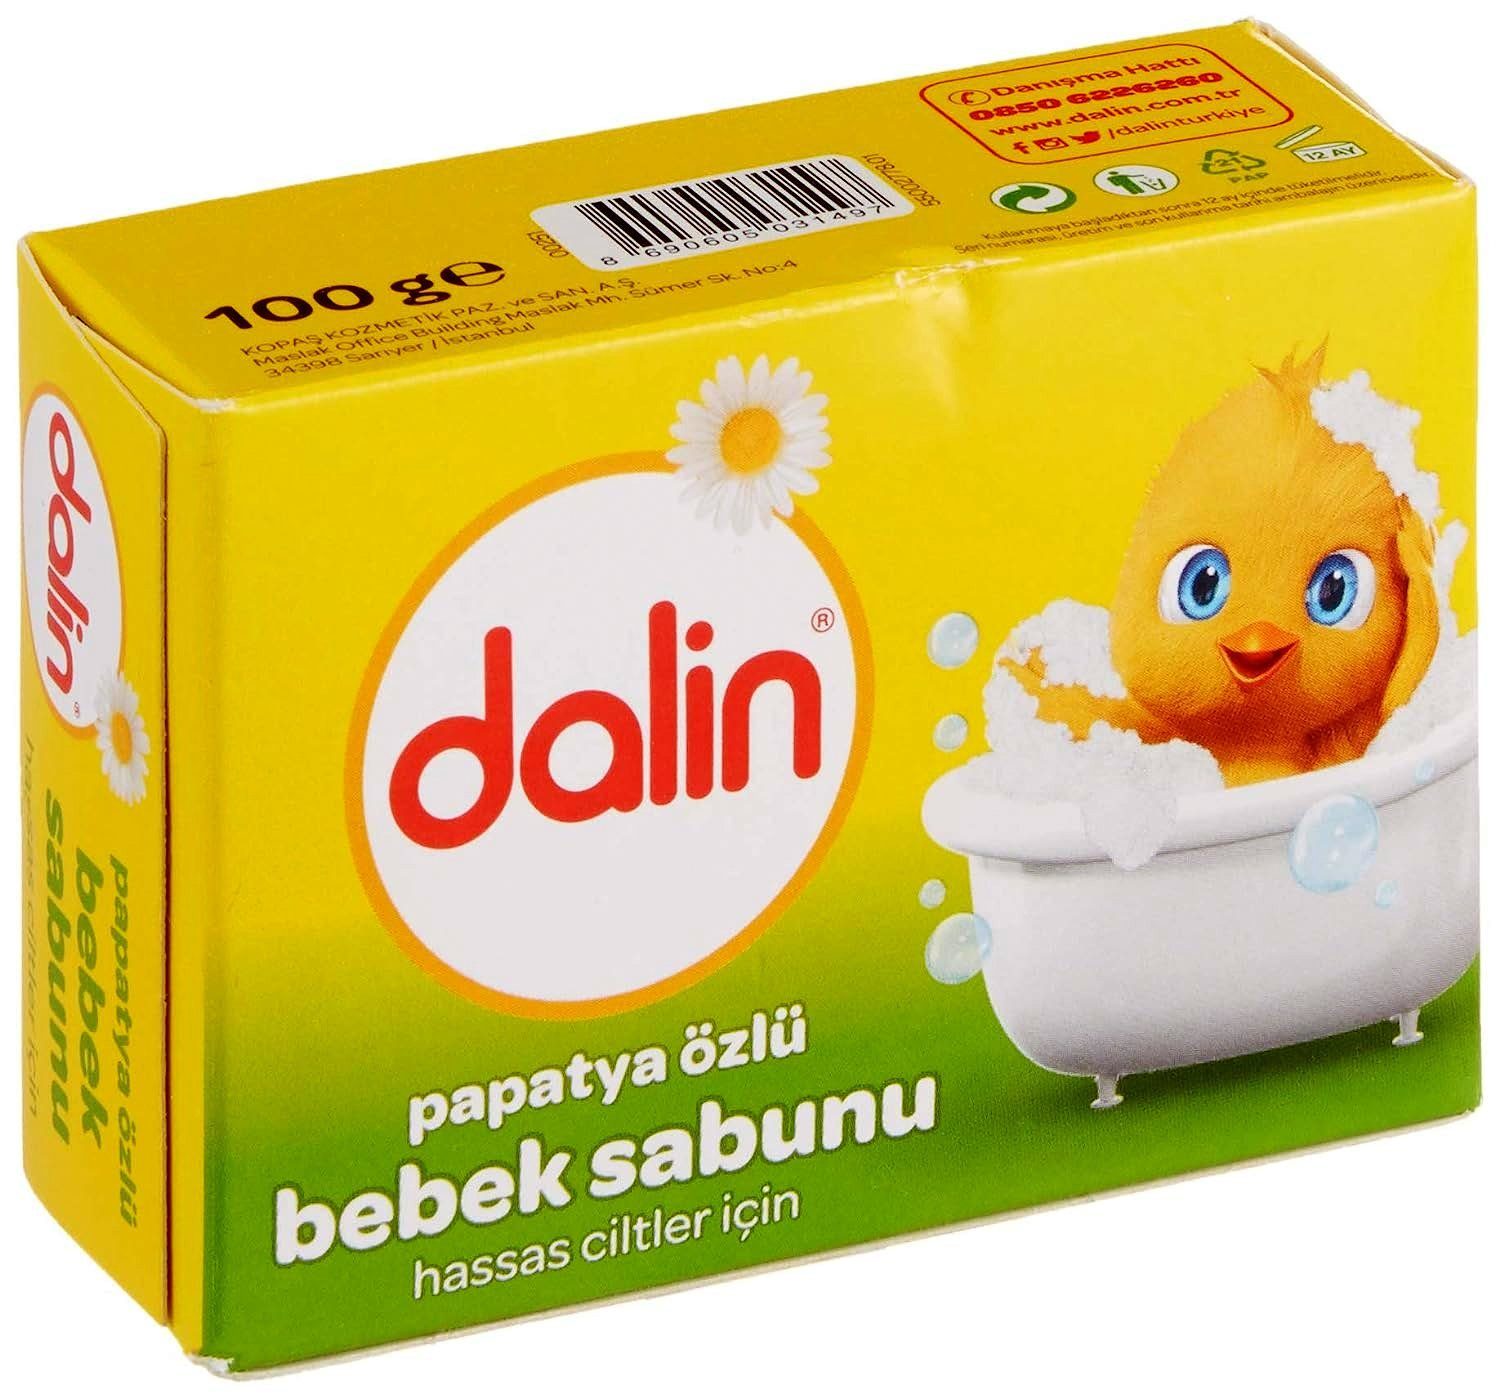 Dalan Handseife Dalin (100g) Babyseife mit Kamillenextrakt - Baby soap camomile extact